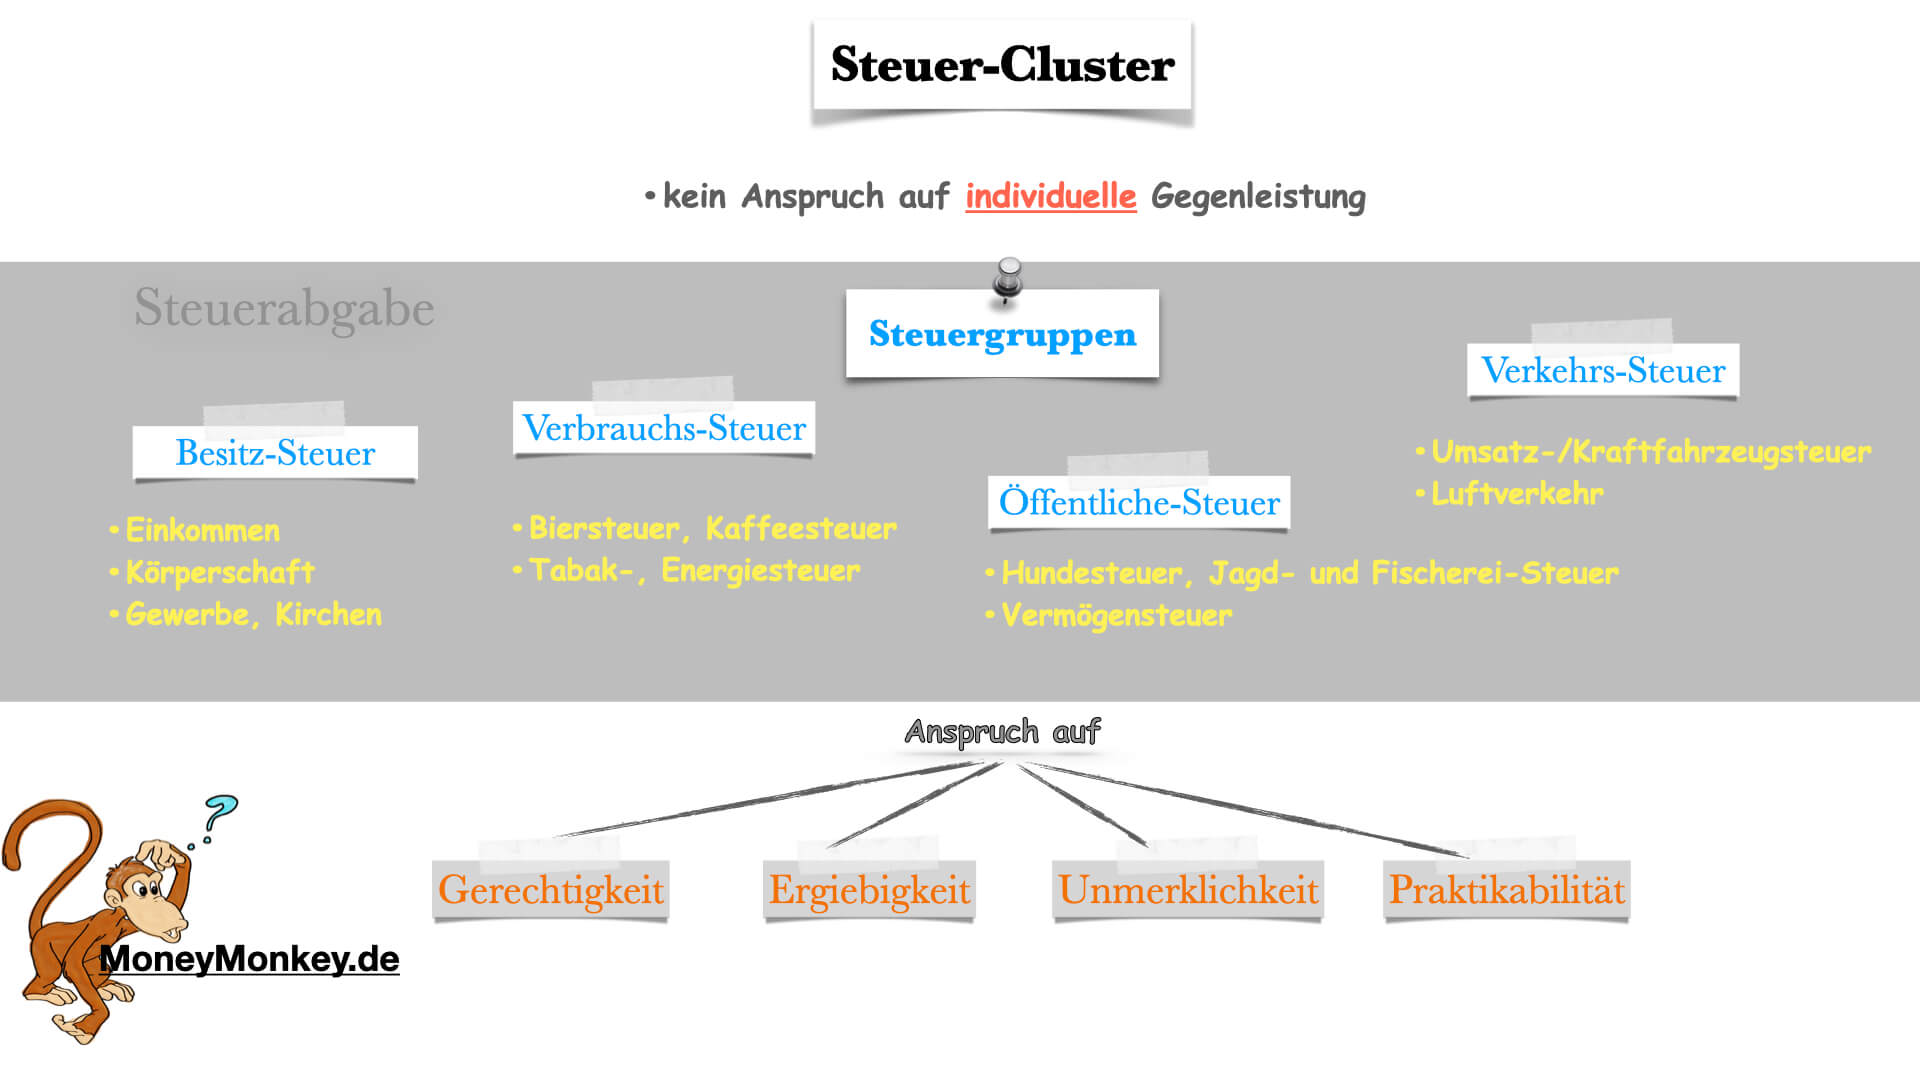 Steuer-Cluster